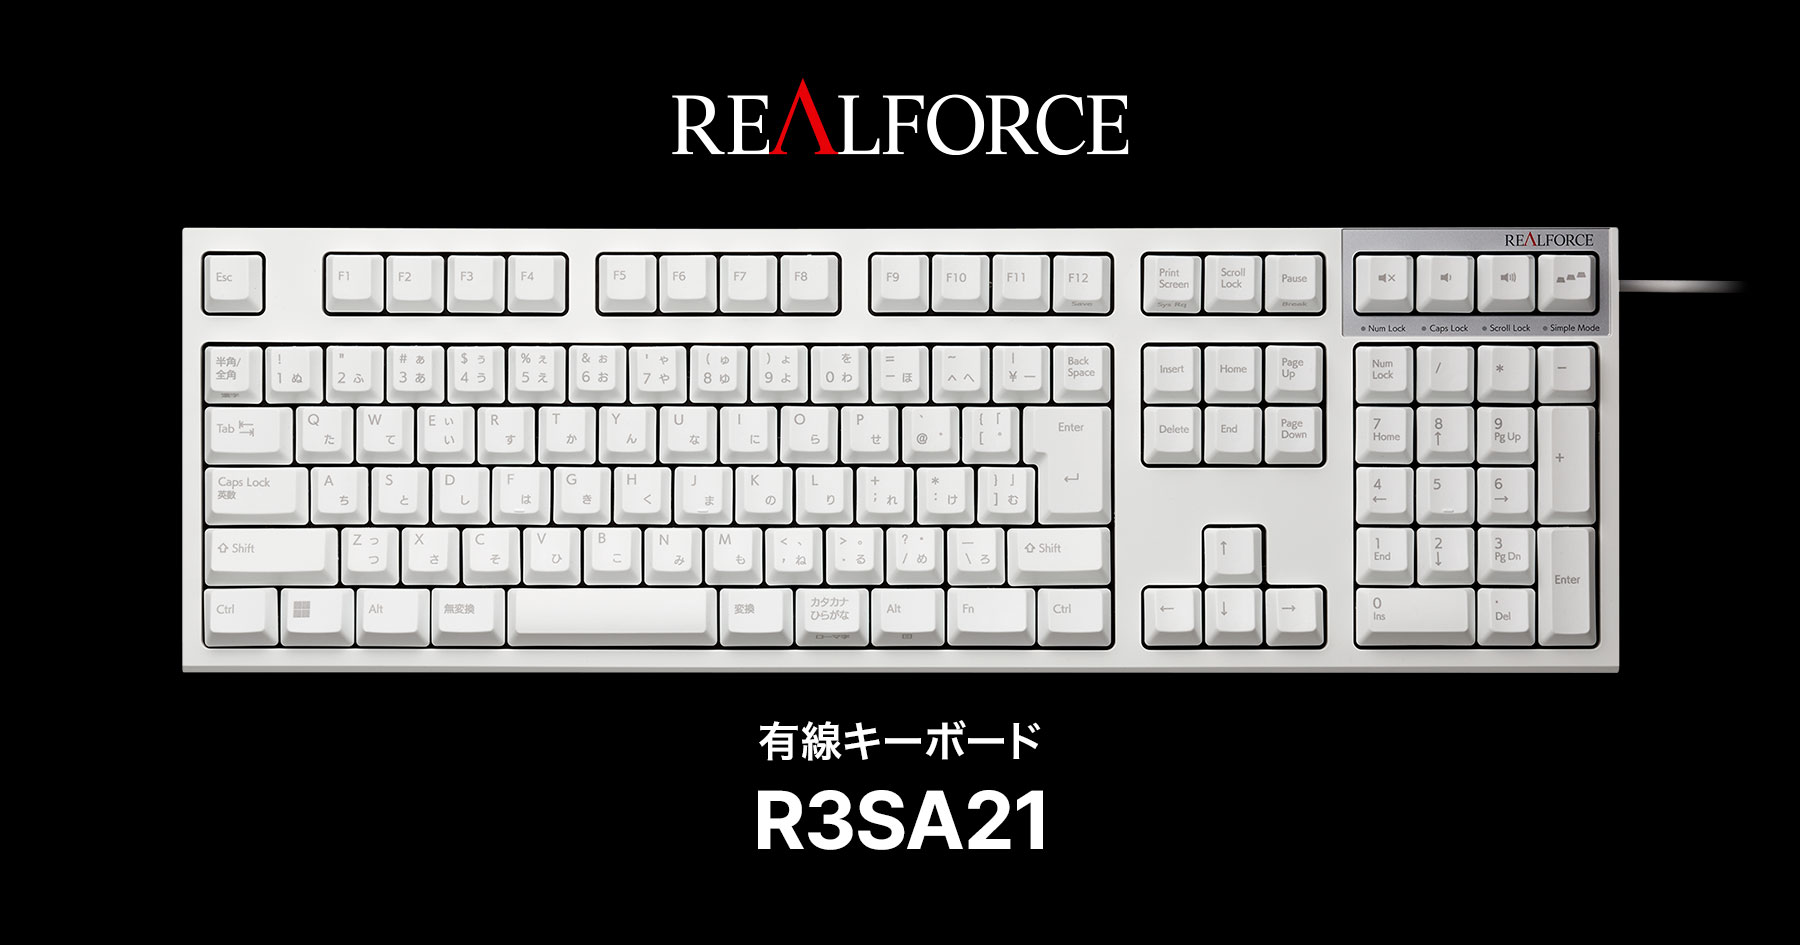 REALFORCE キーボード R3SA21